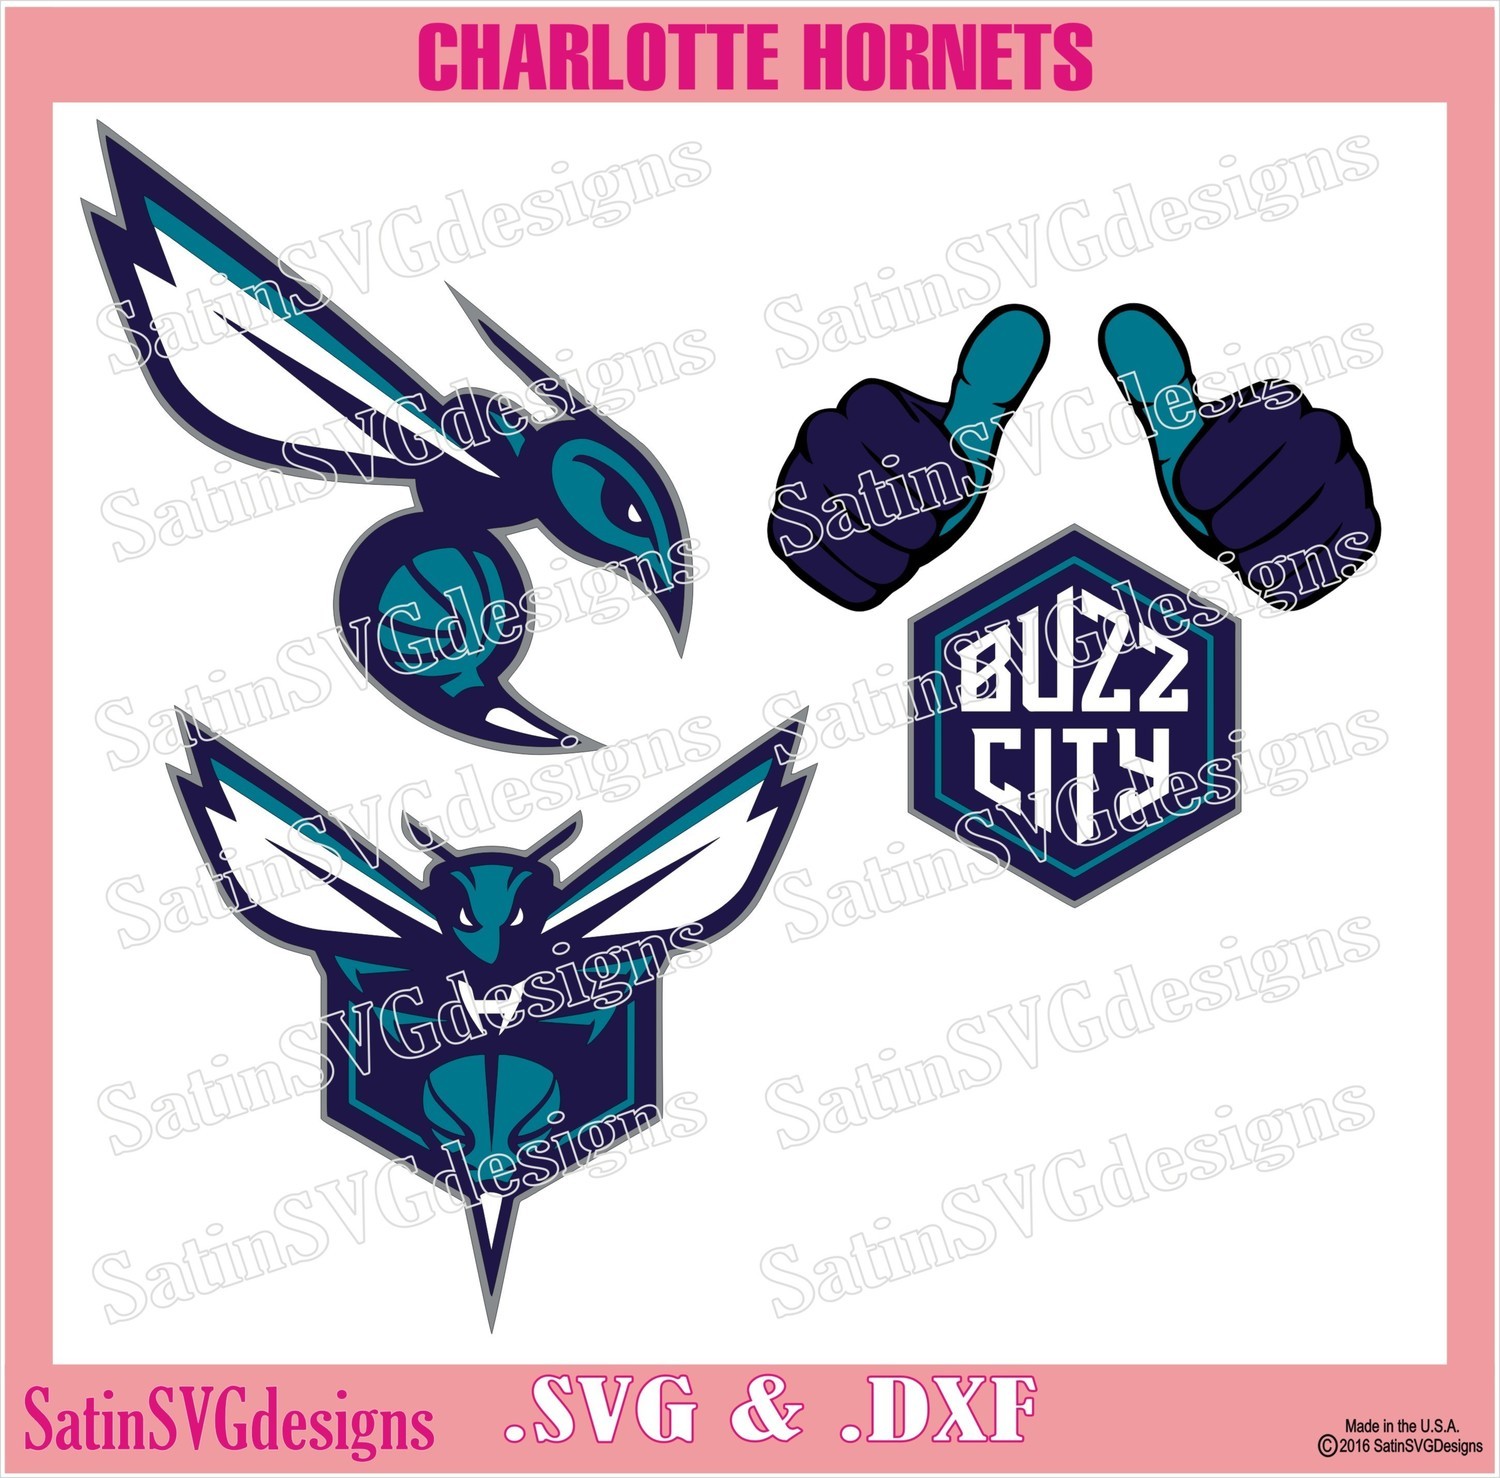 NBA Charlotte Hornets 'Buzz City' Pin